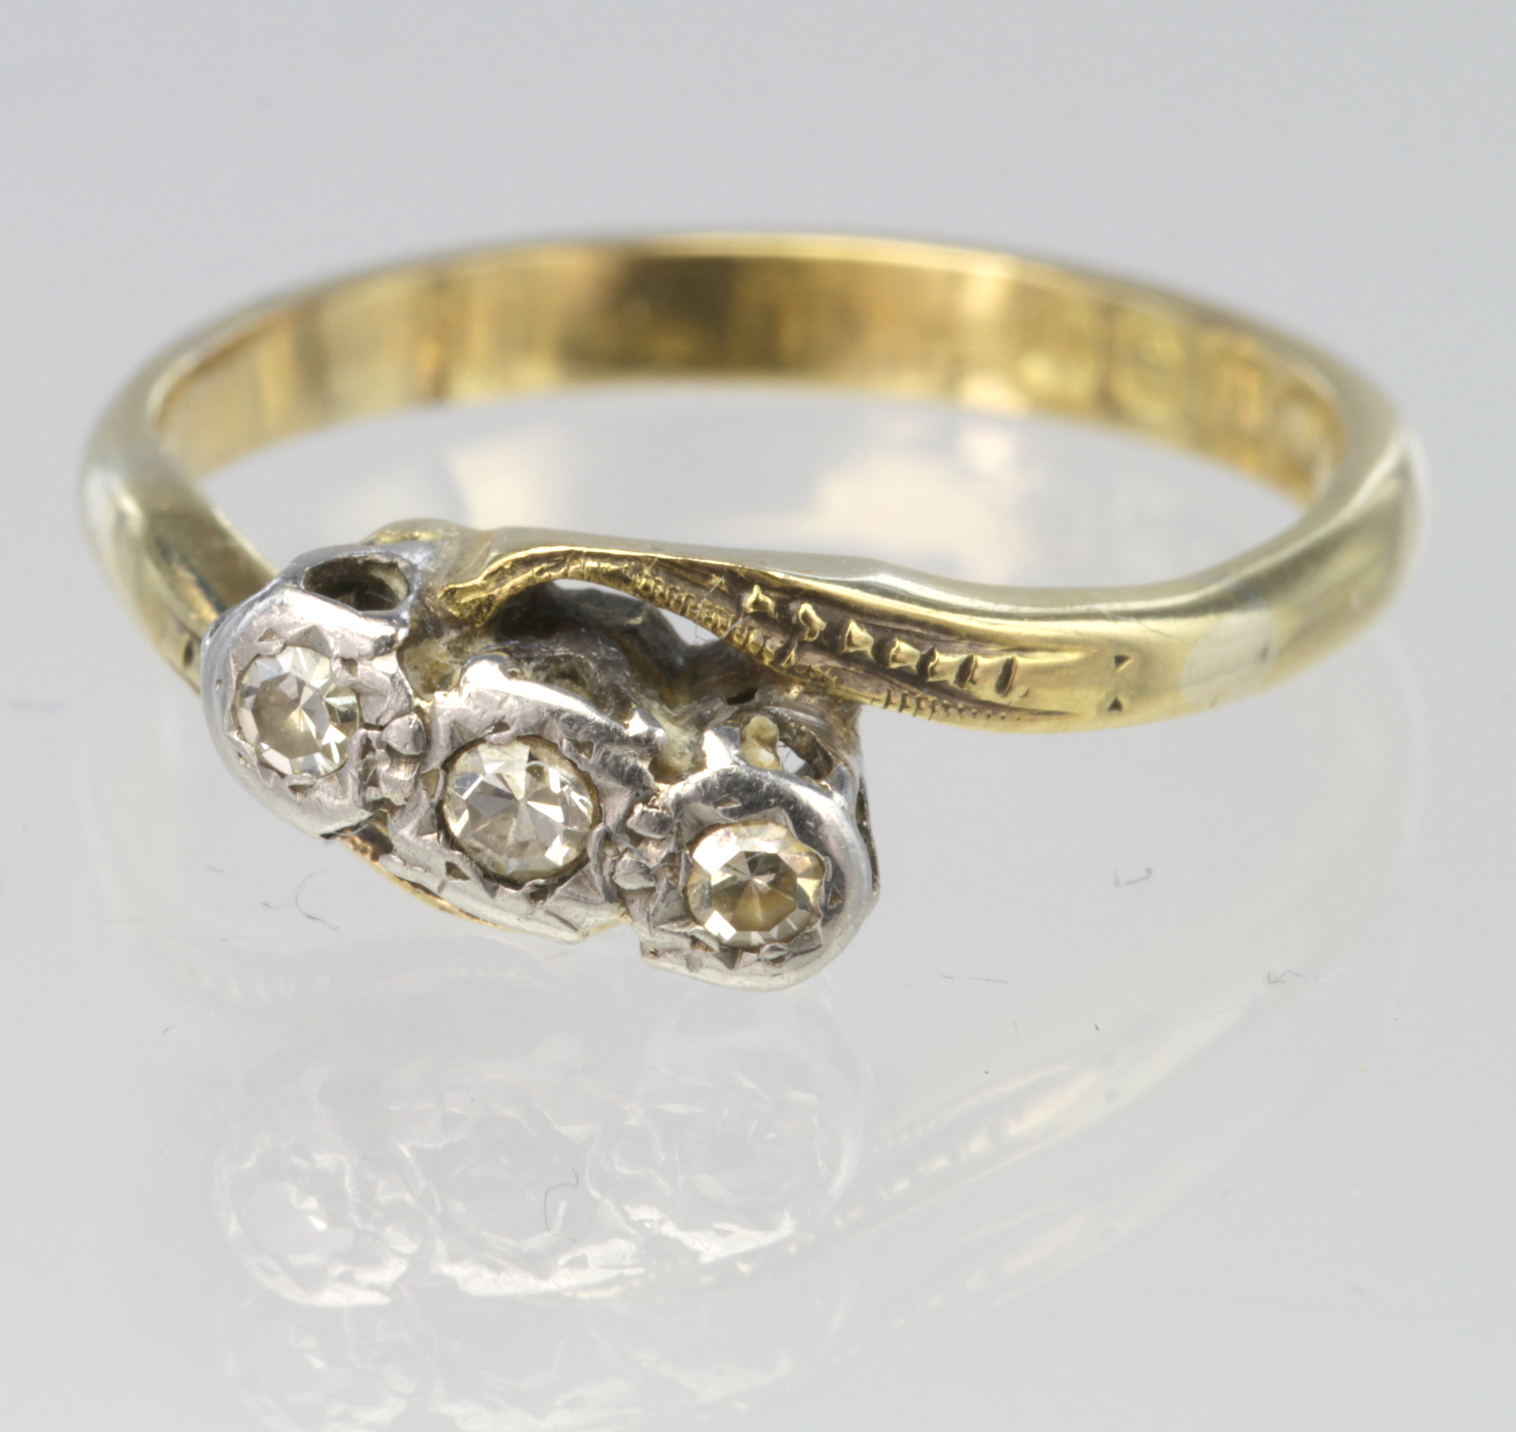 18ct Gold three stone Diamond Ring size K weight 3.0g